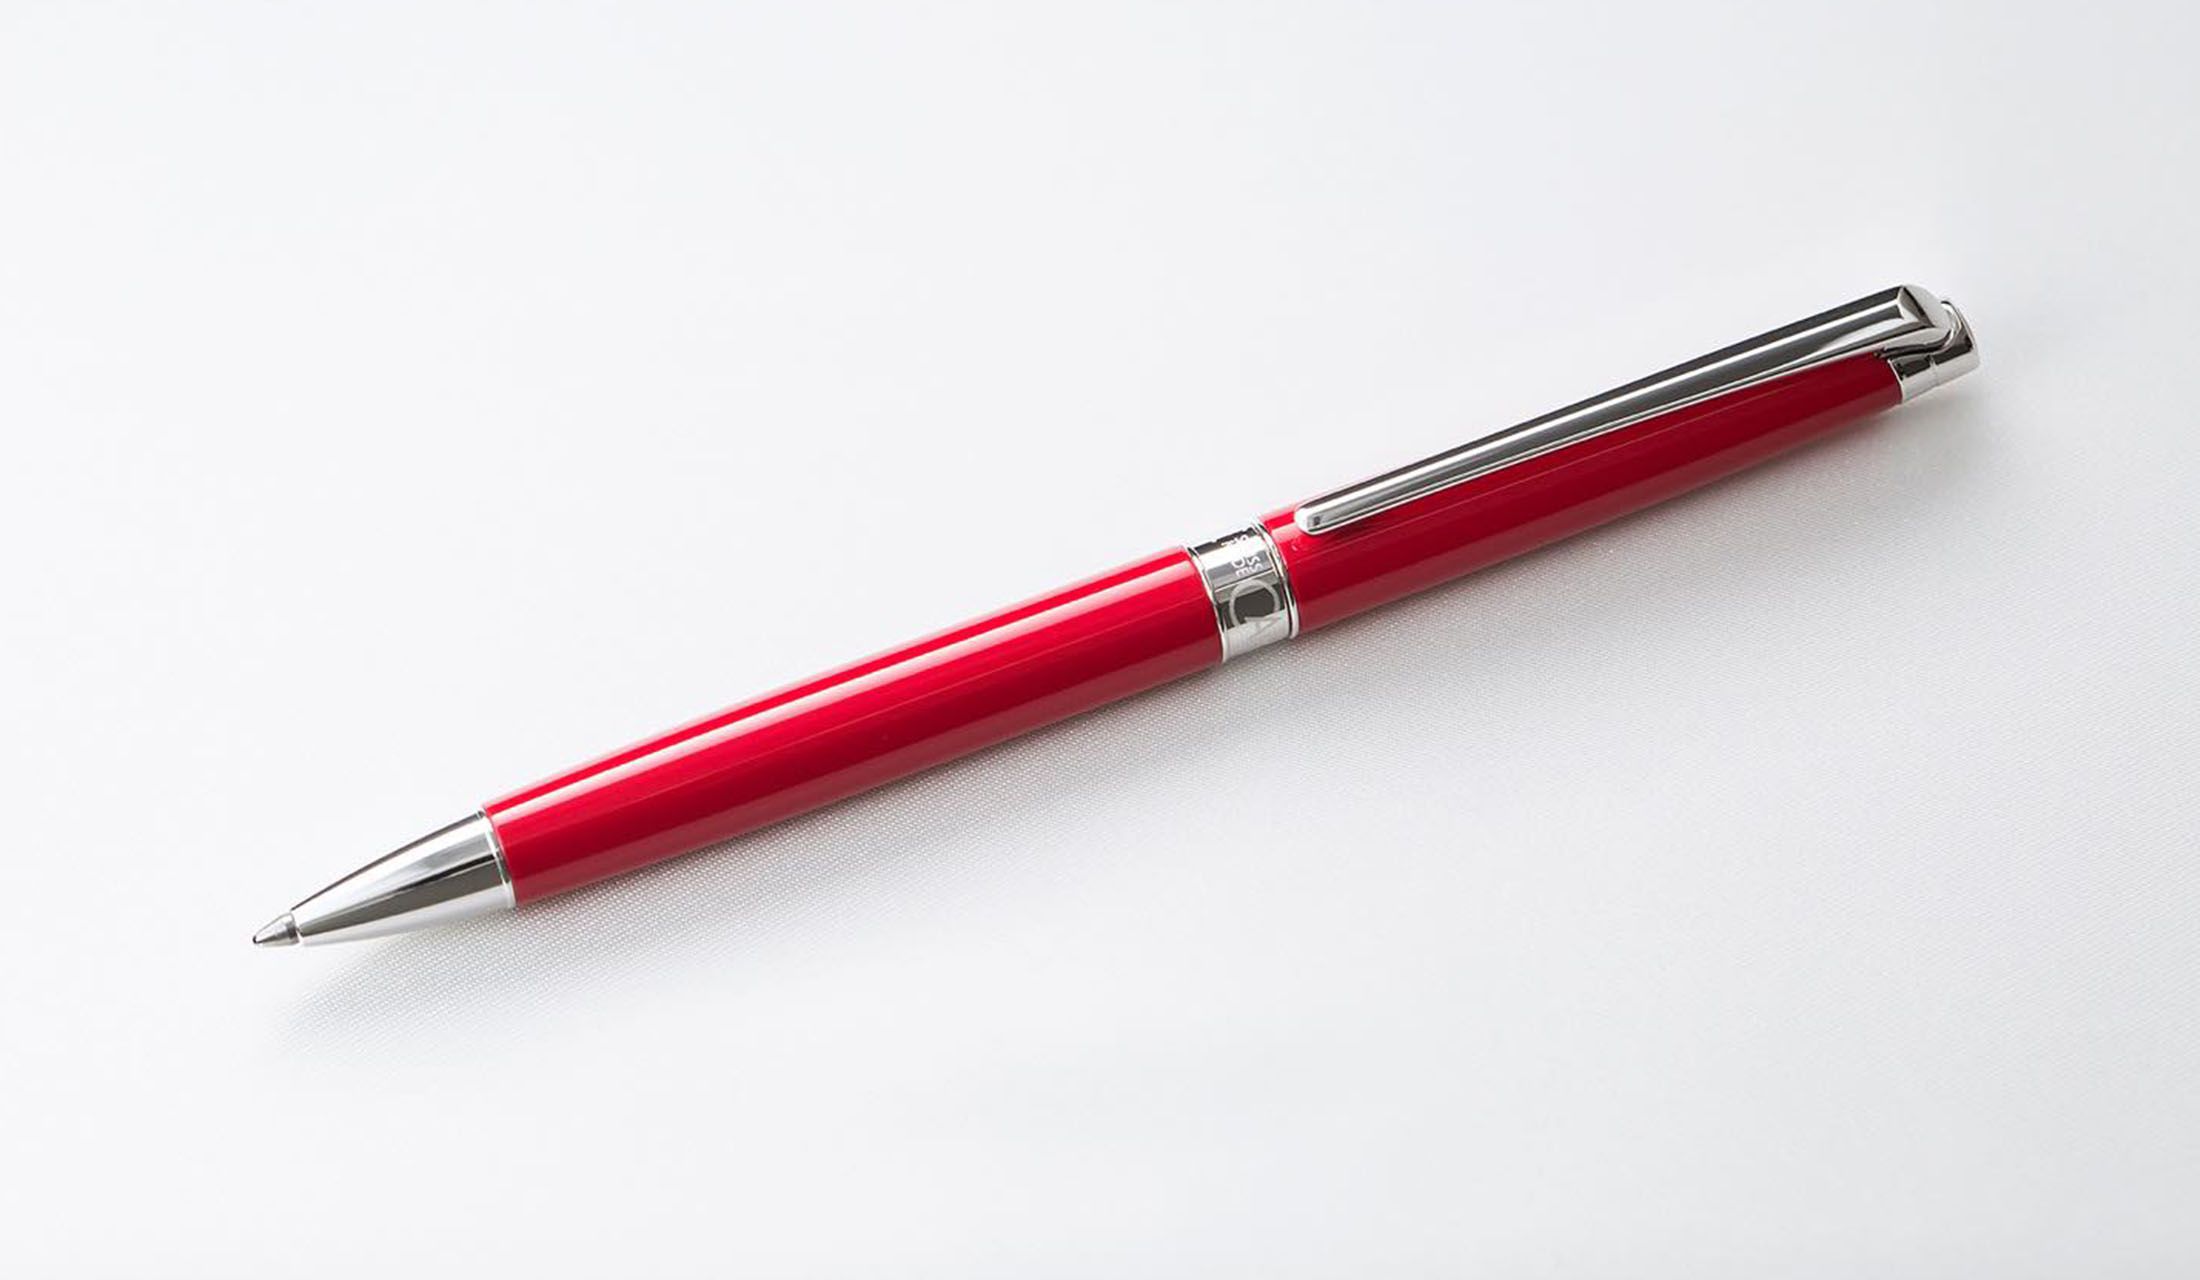 Xezoインコグニト・各色 パーブル・メタル色仕上げ ブラス ボールペン。雅びやかな贈り物として最適。ダイアモンド・カット彫。一つ一つのペン - 1